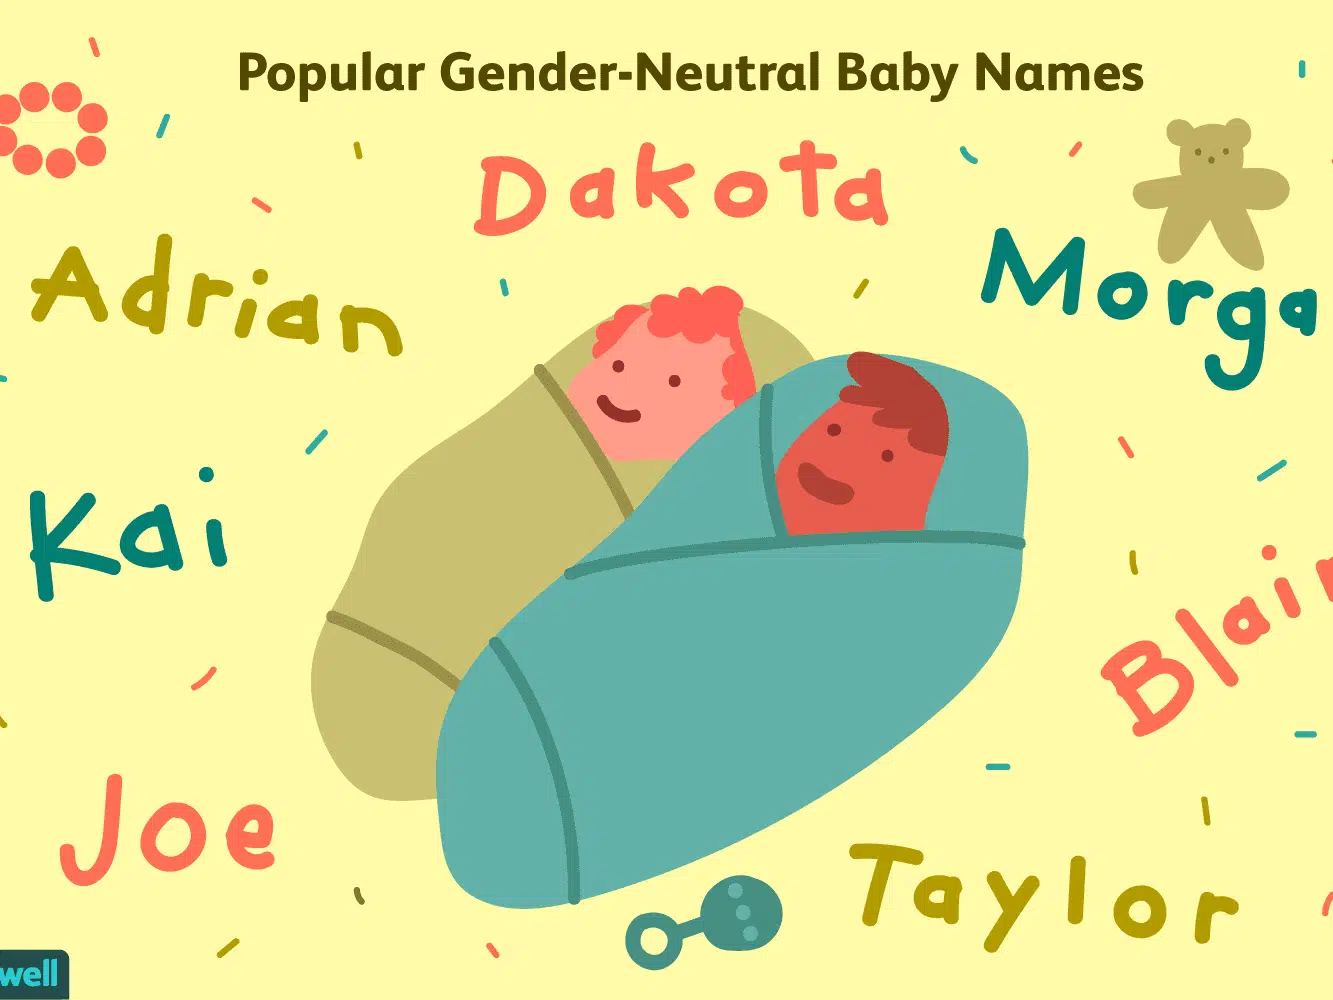 Gender-Neutral Baby Names